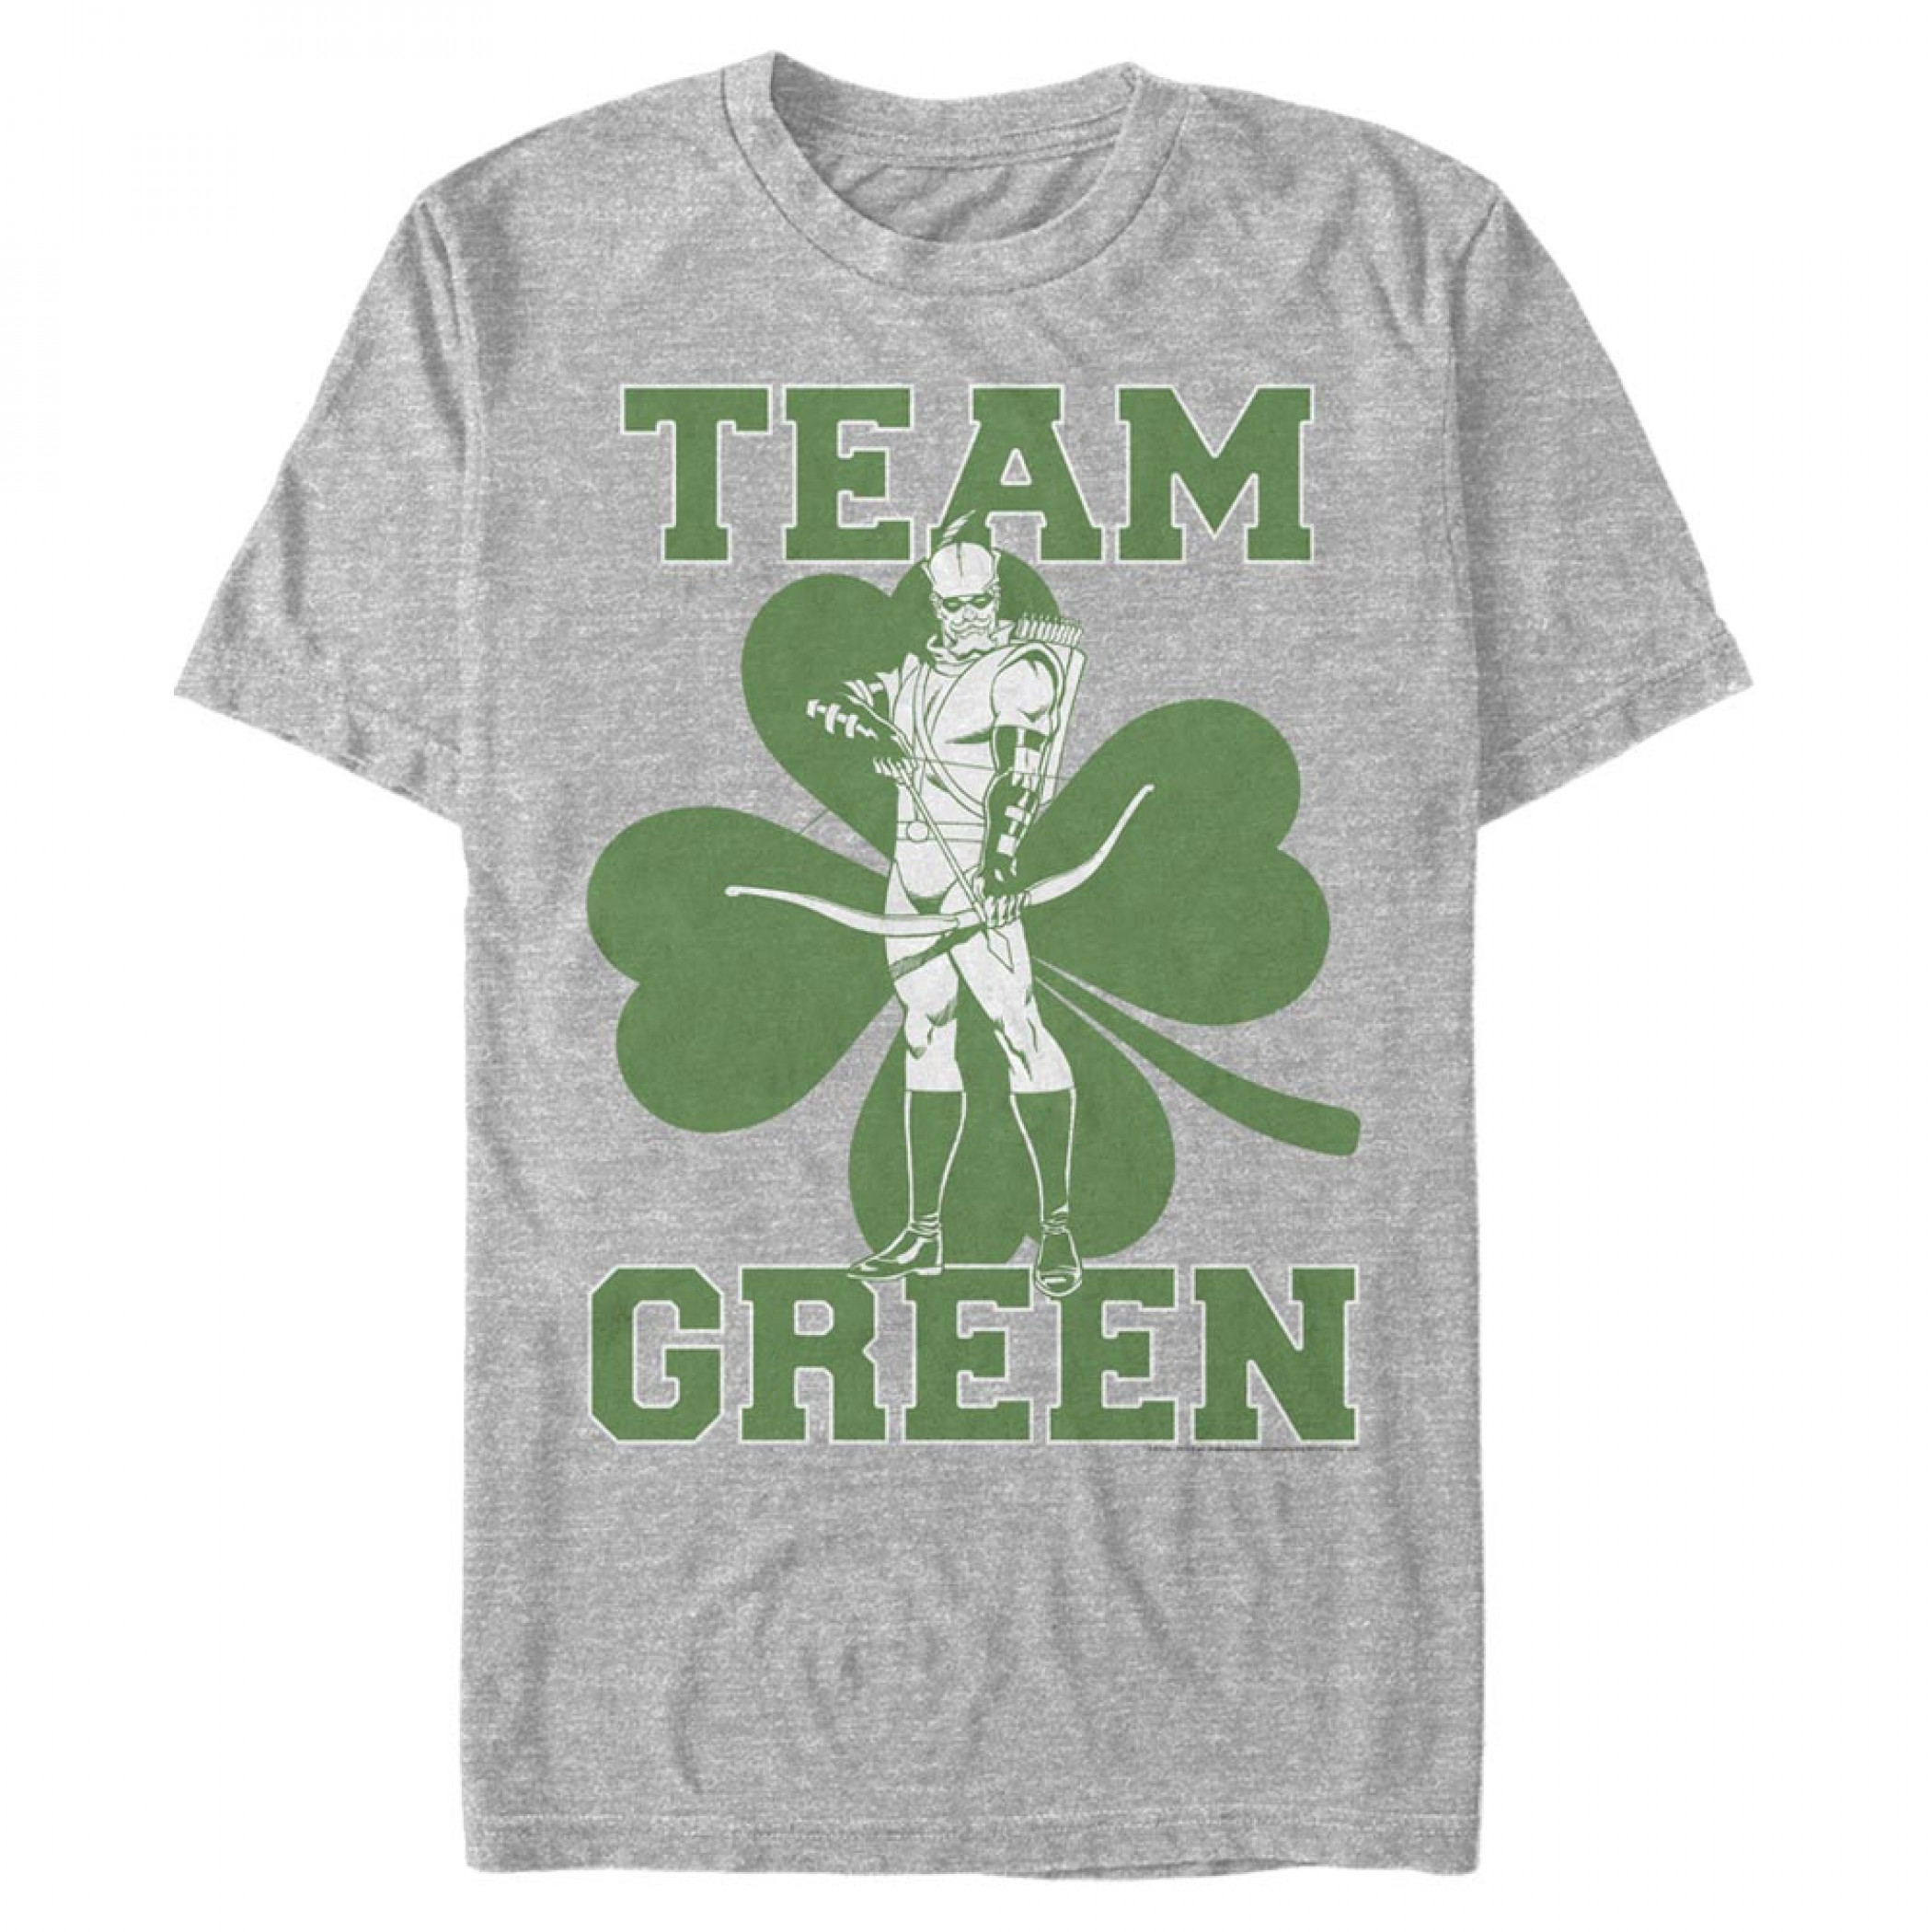 Green Arrow Team Green St. Patrick's Day T-Shirt